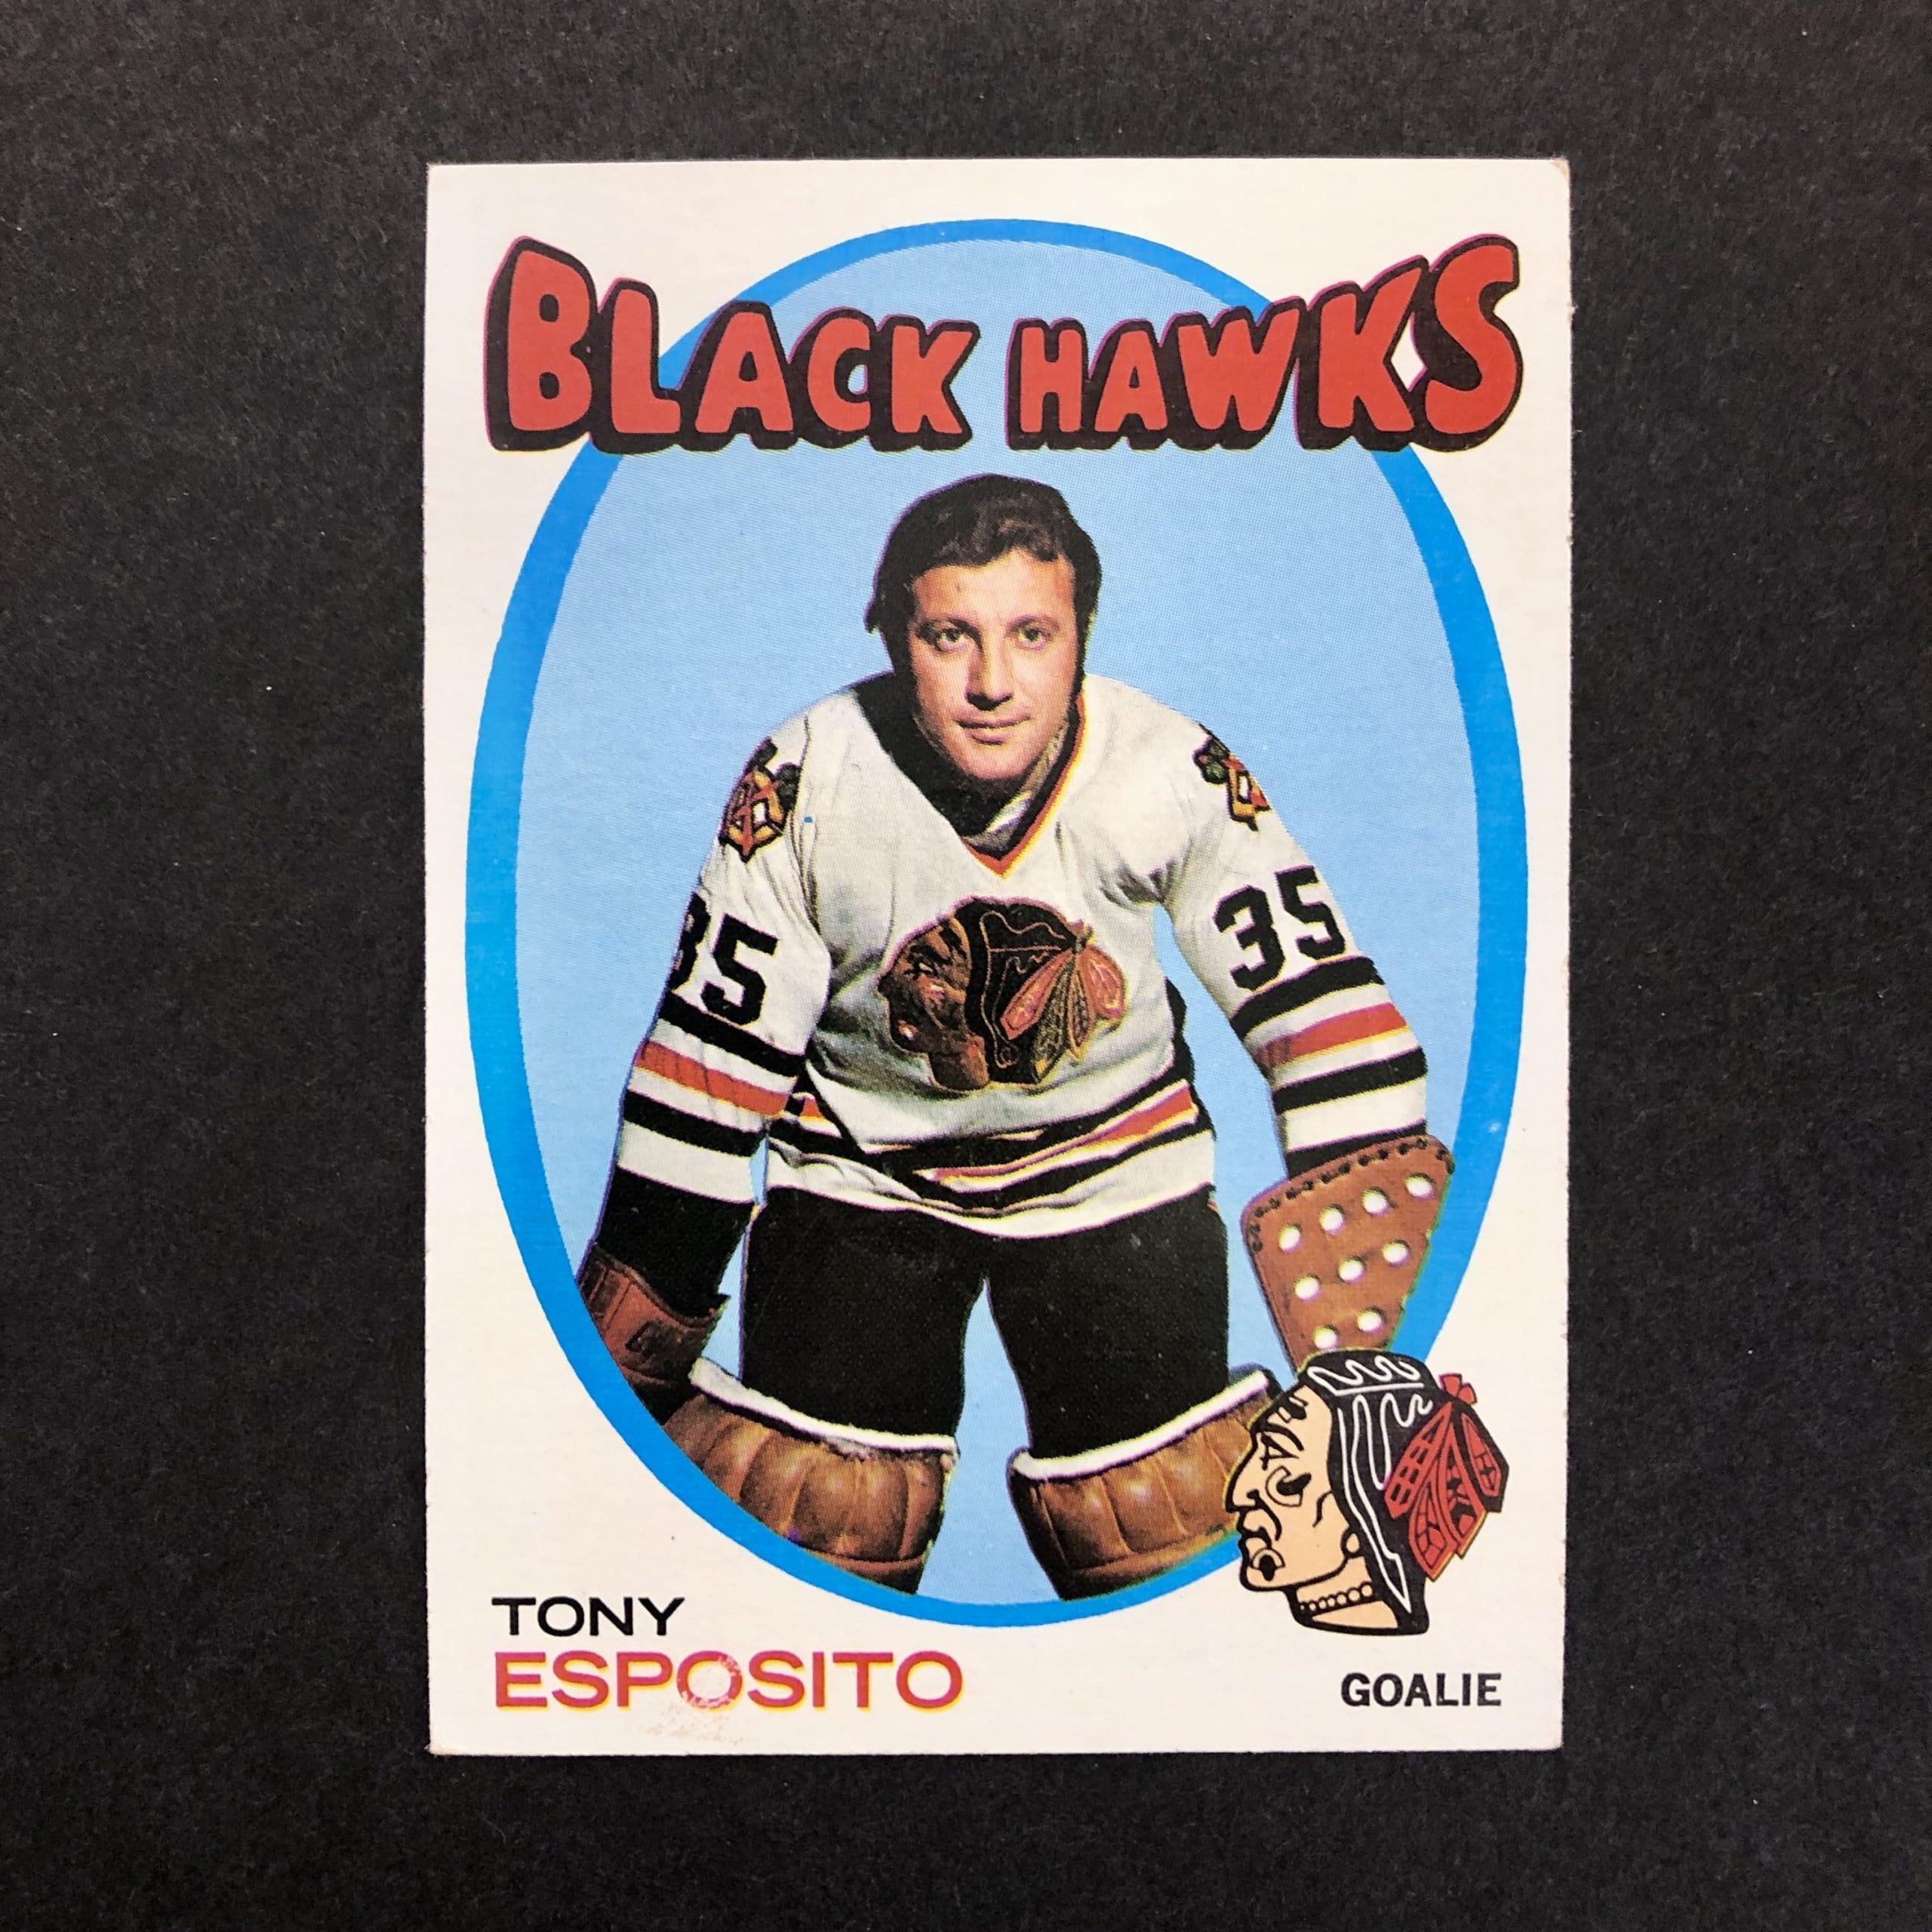 Bernie Federko 1978 St. Louis Blues Vintage Throwback NHL Hockey